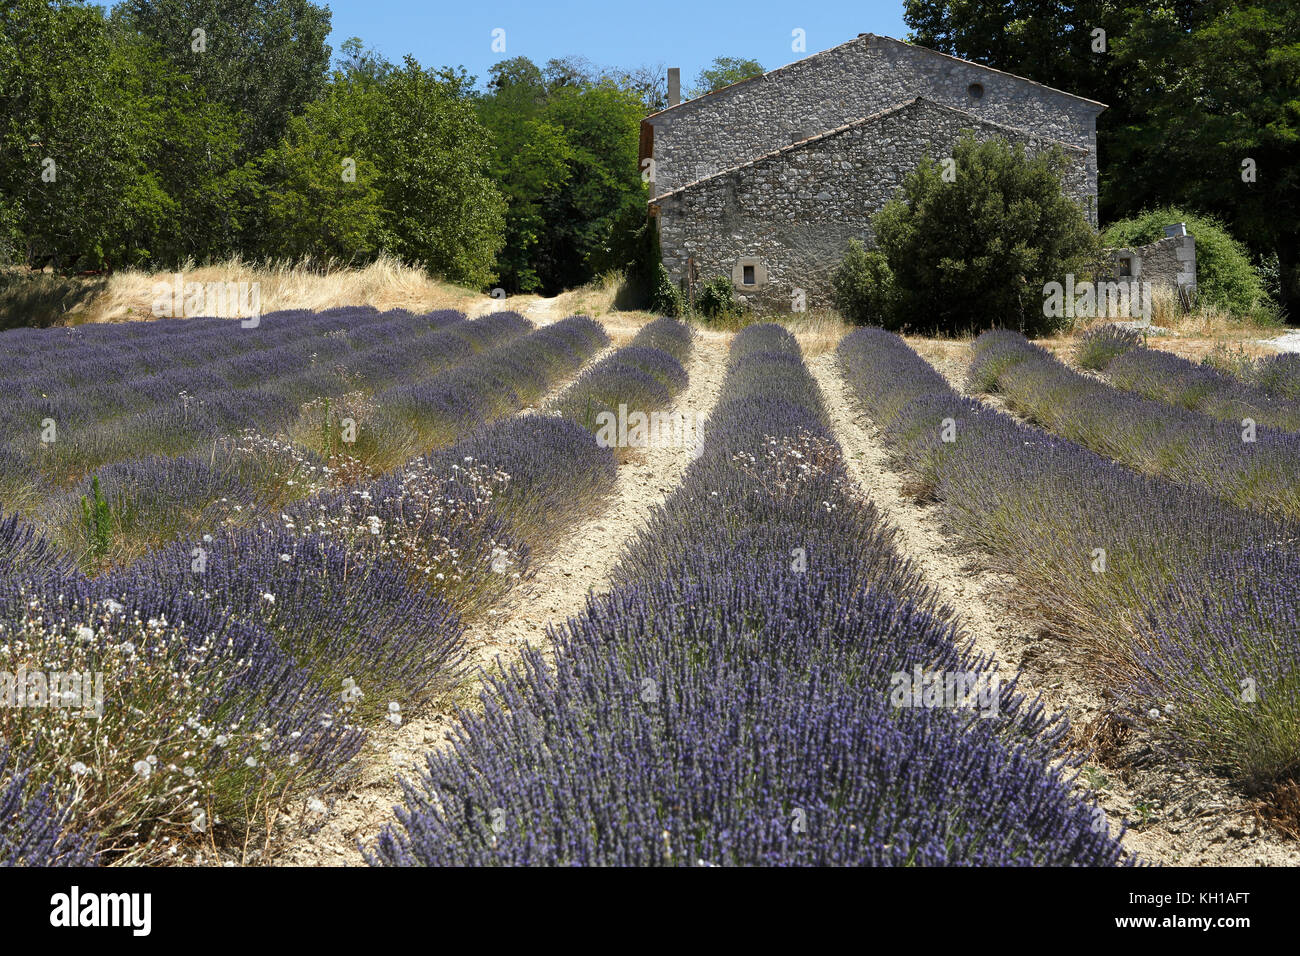 Lavendelfeld, Plateau de Valensole, Valensole, Provence-alpes-côte d'Azur, Frankreich Stockfoto